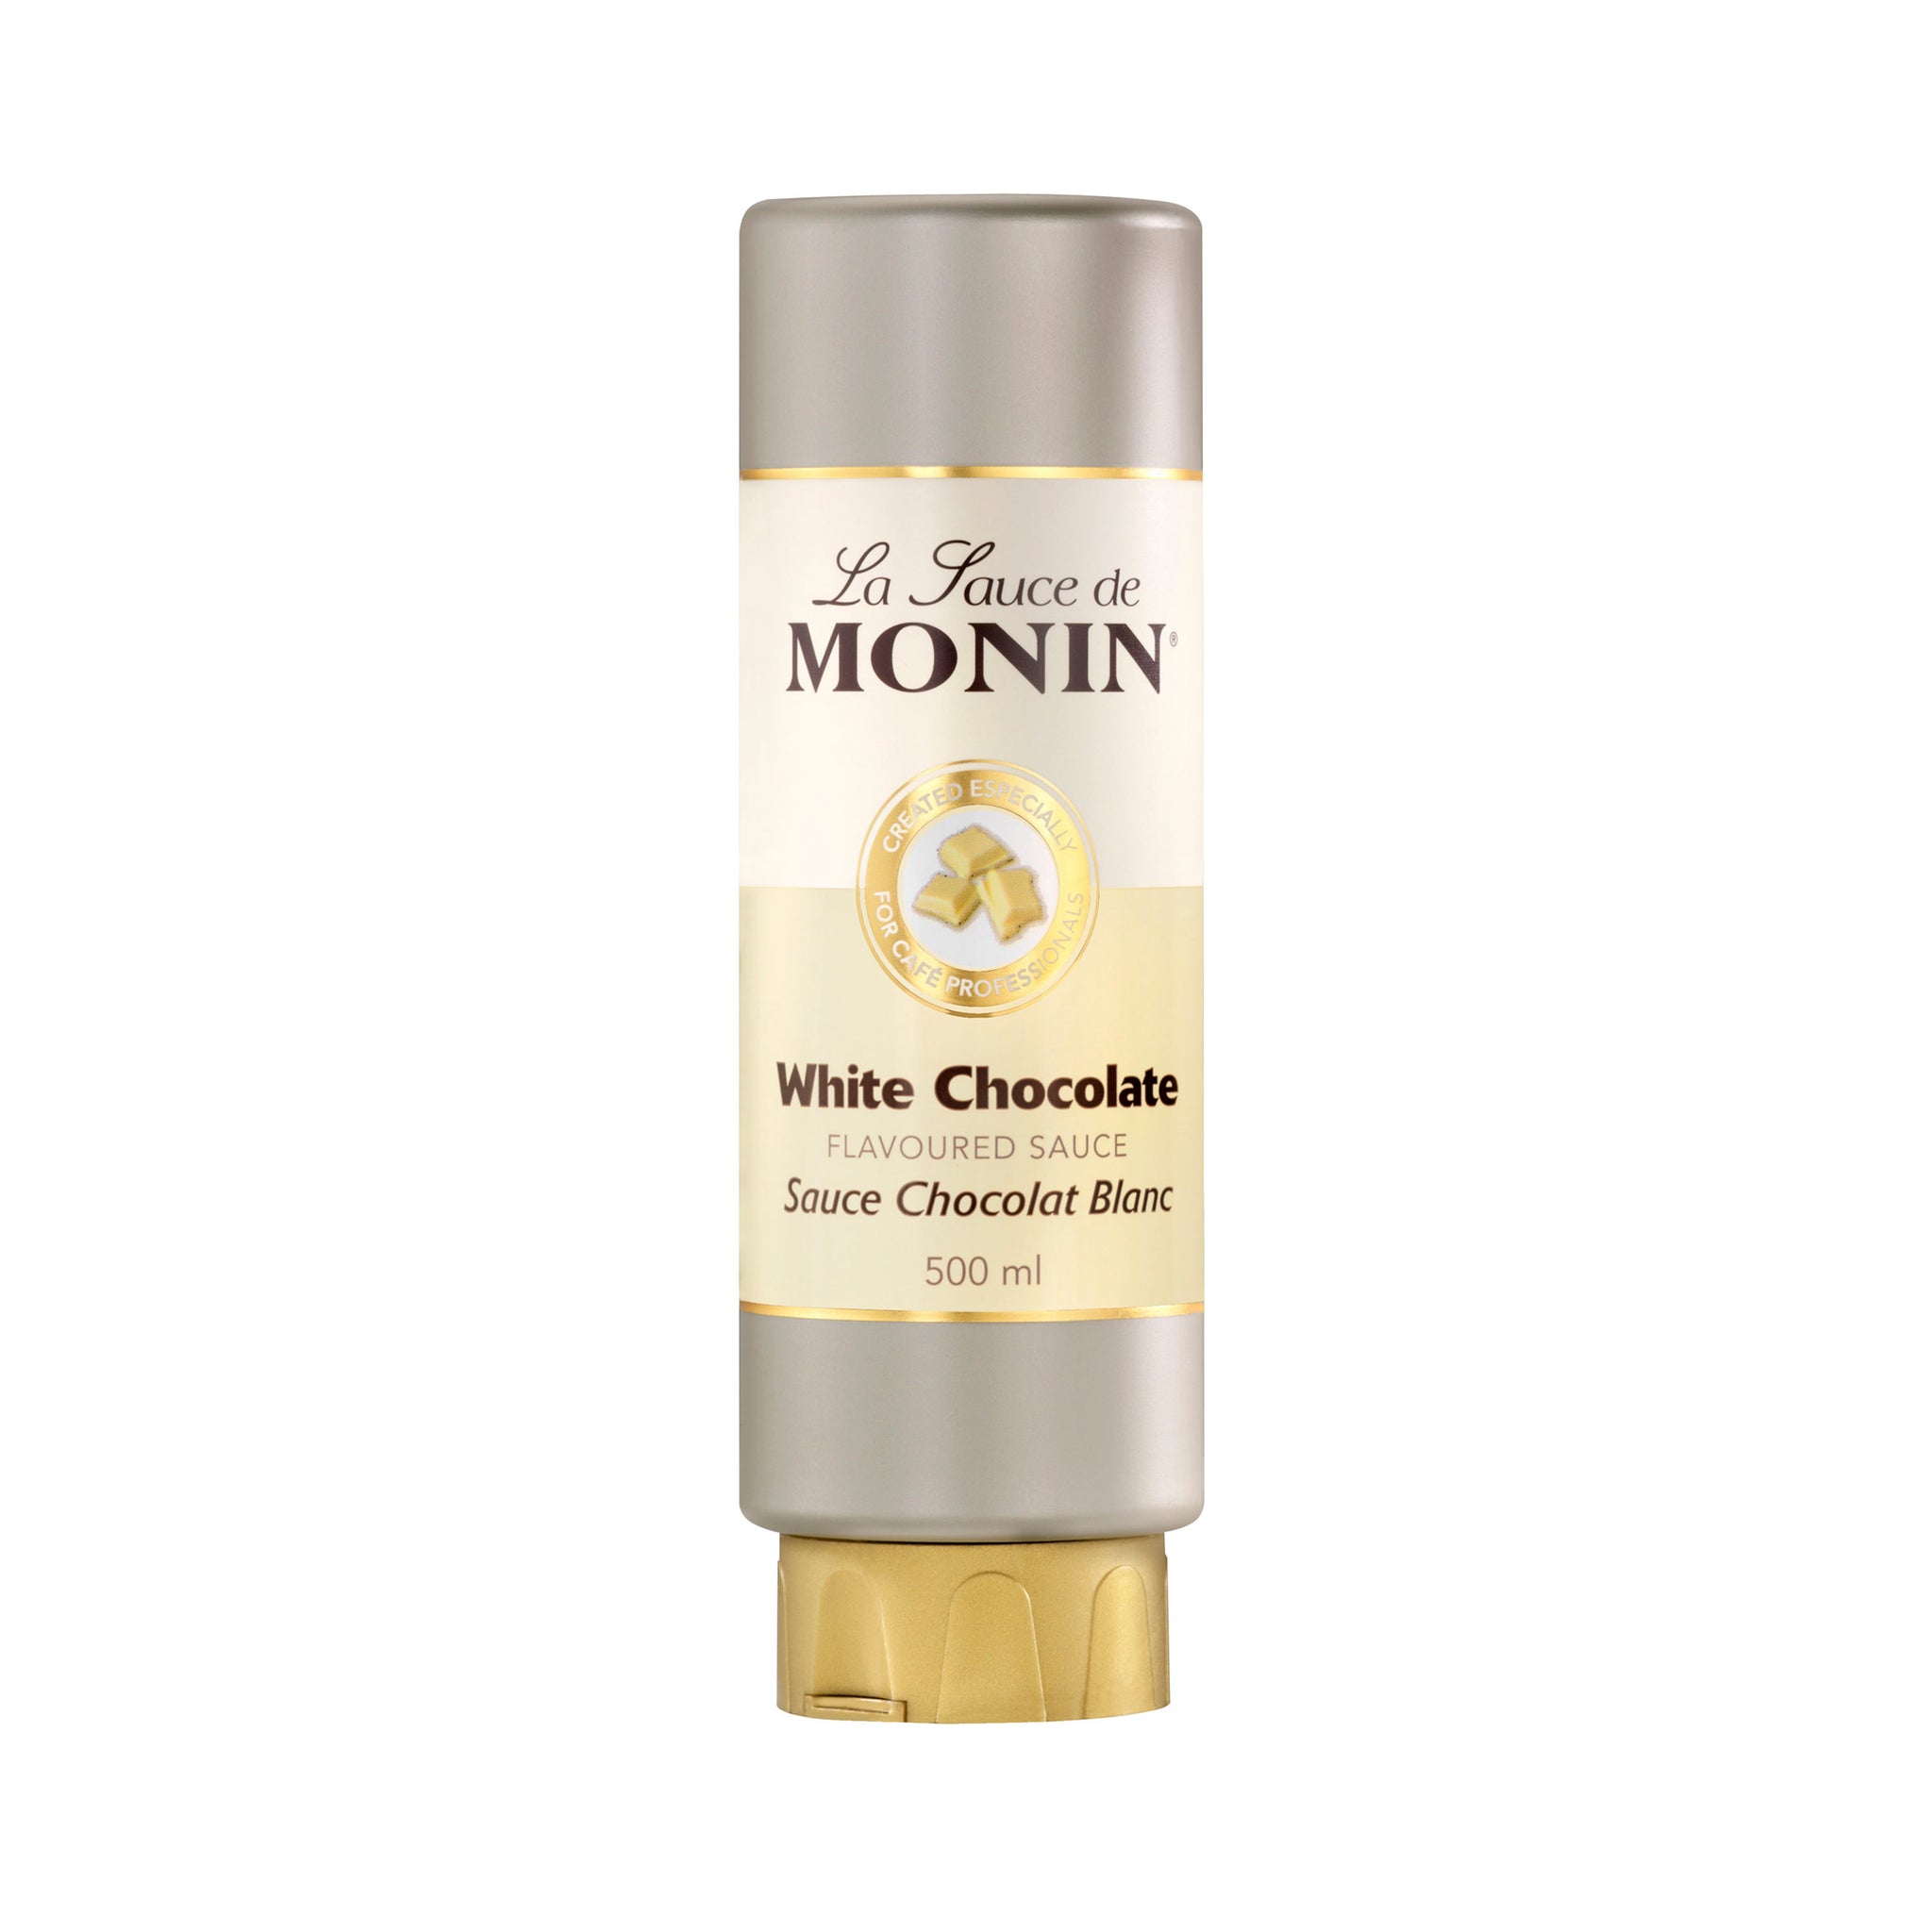 500ml bottle of MONIN White Chocolate flavoured sauce. Le Sauce de MONIN squeezable bottle. Sauce Chocolat Blanc